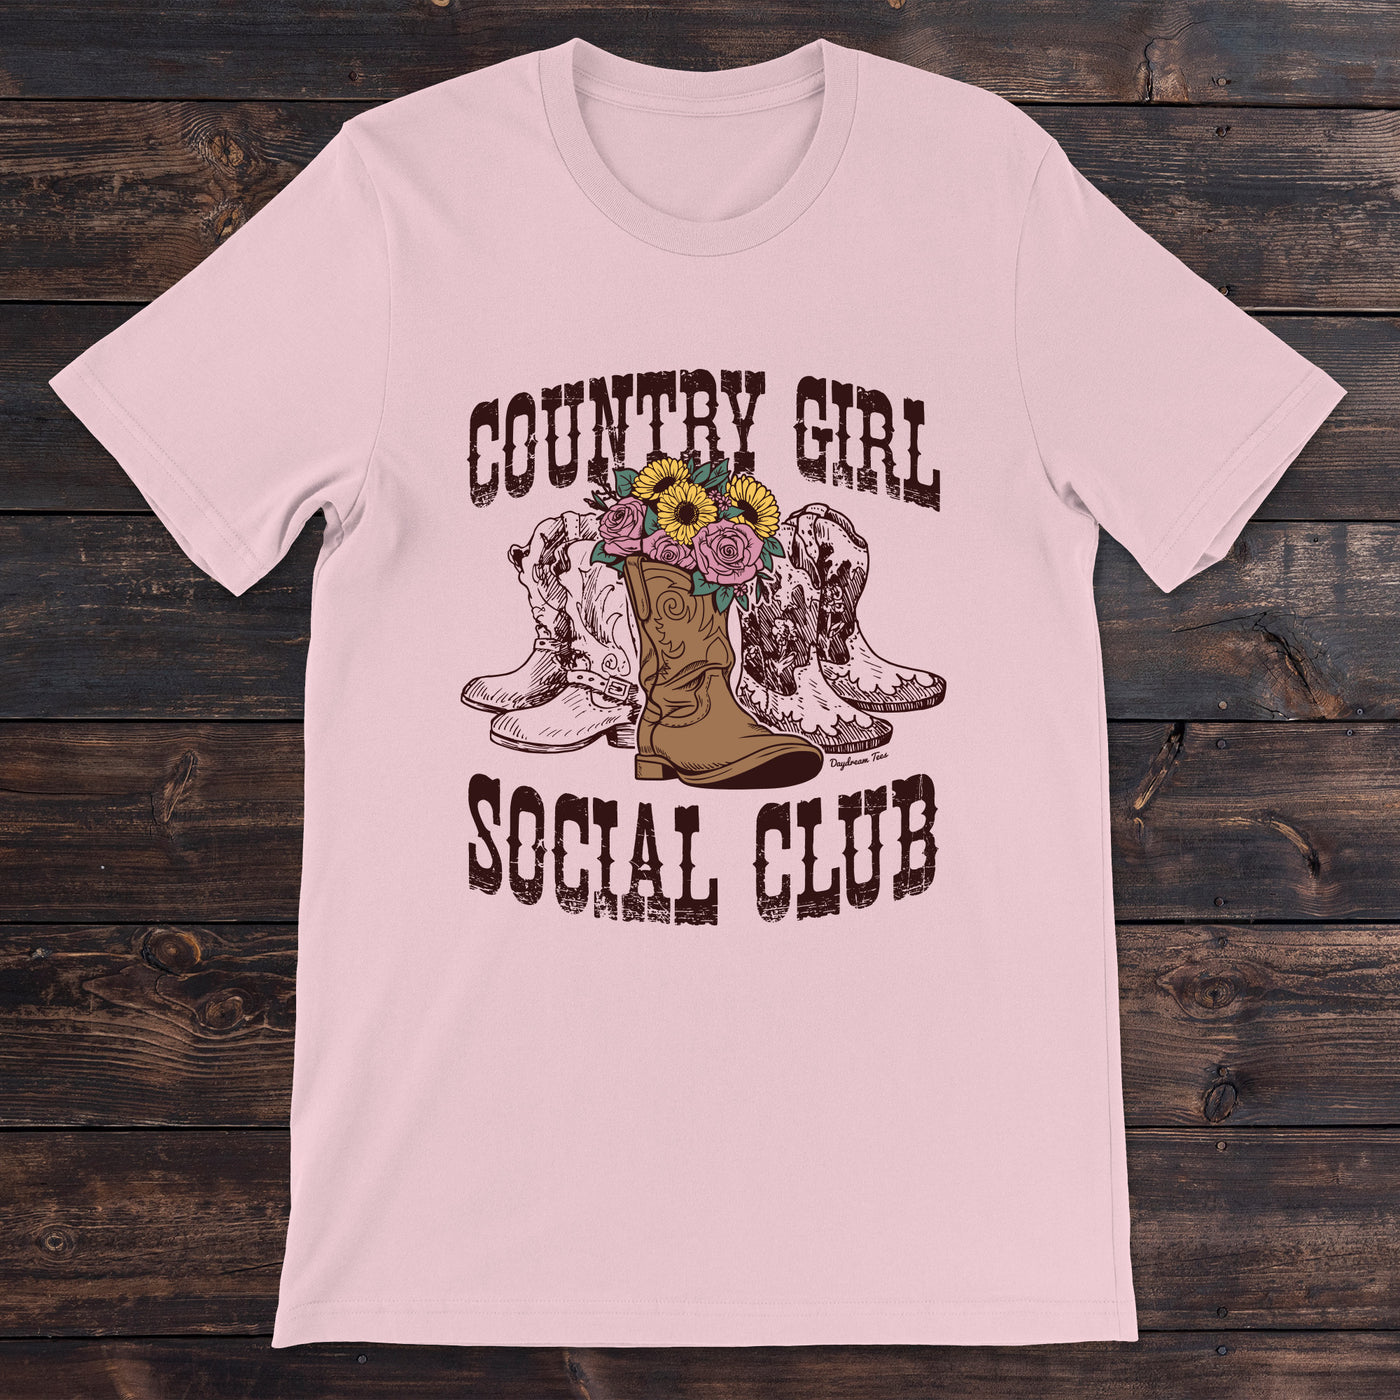 Daydream Tees Country Girl Social Club